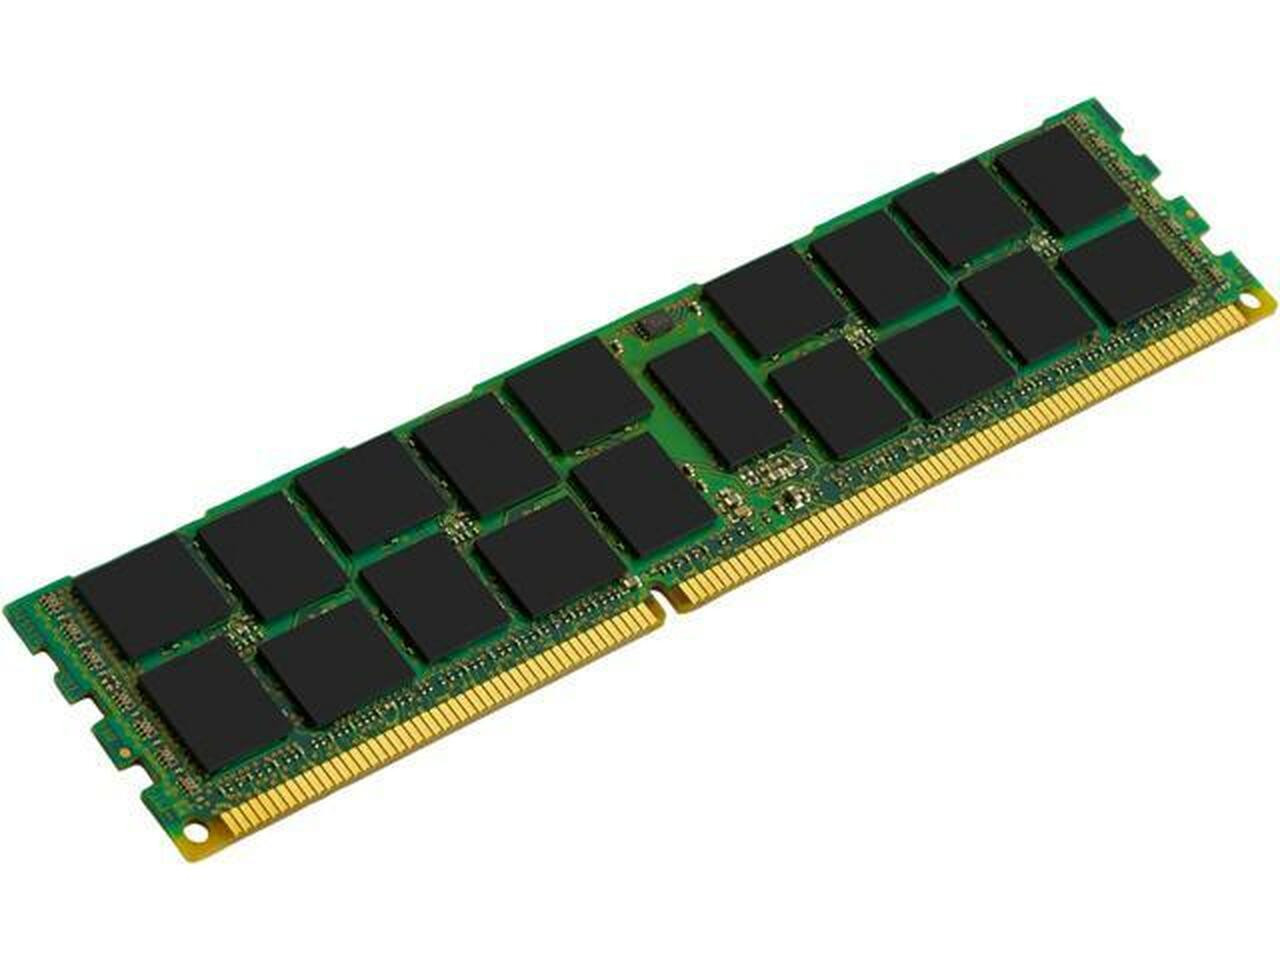 Netpatibles 4GB DDR3 SDRAM Memory Module - 669322-B212-NPM